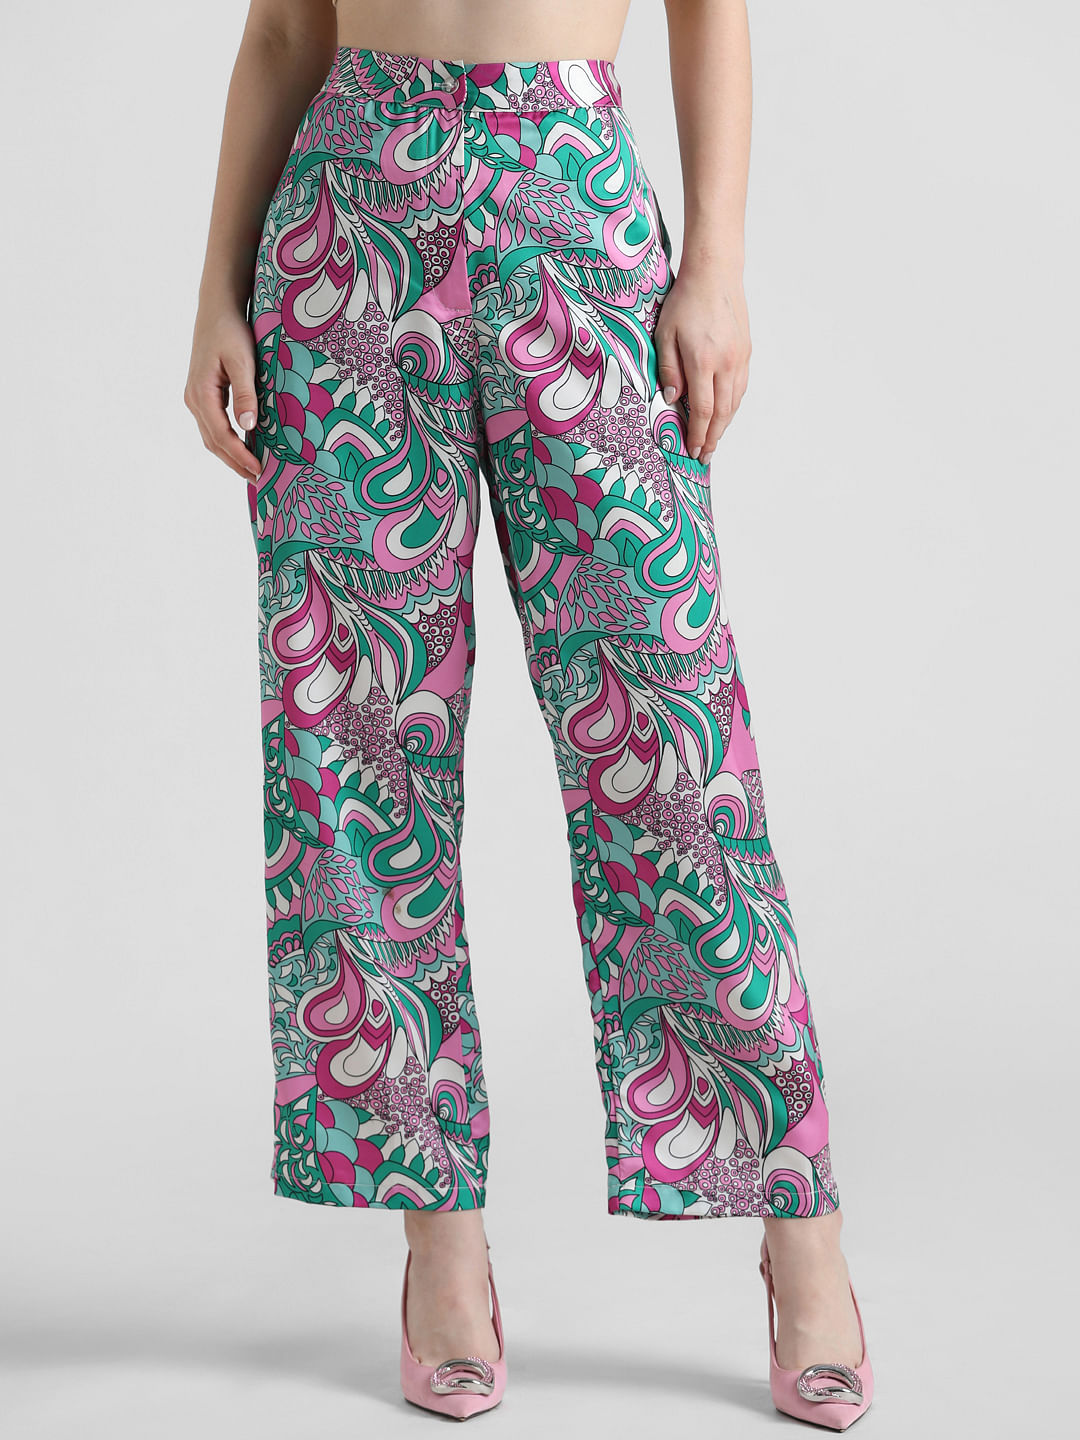 Floral Print Pants : Target